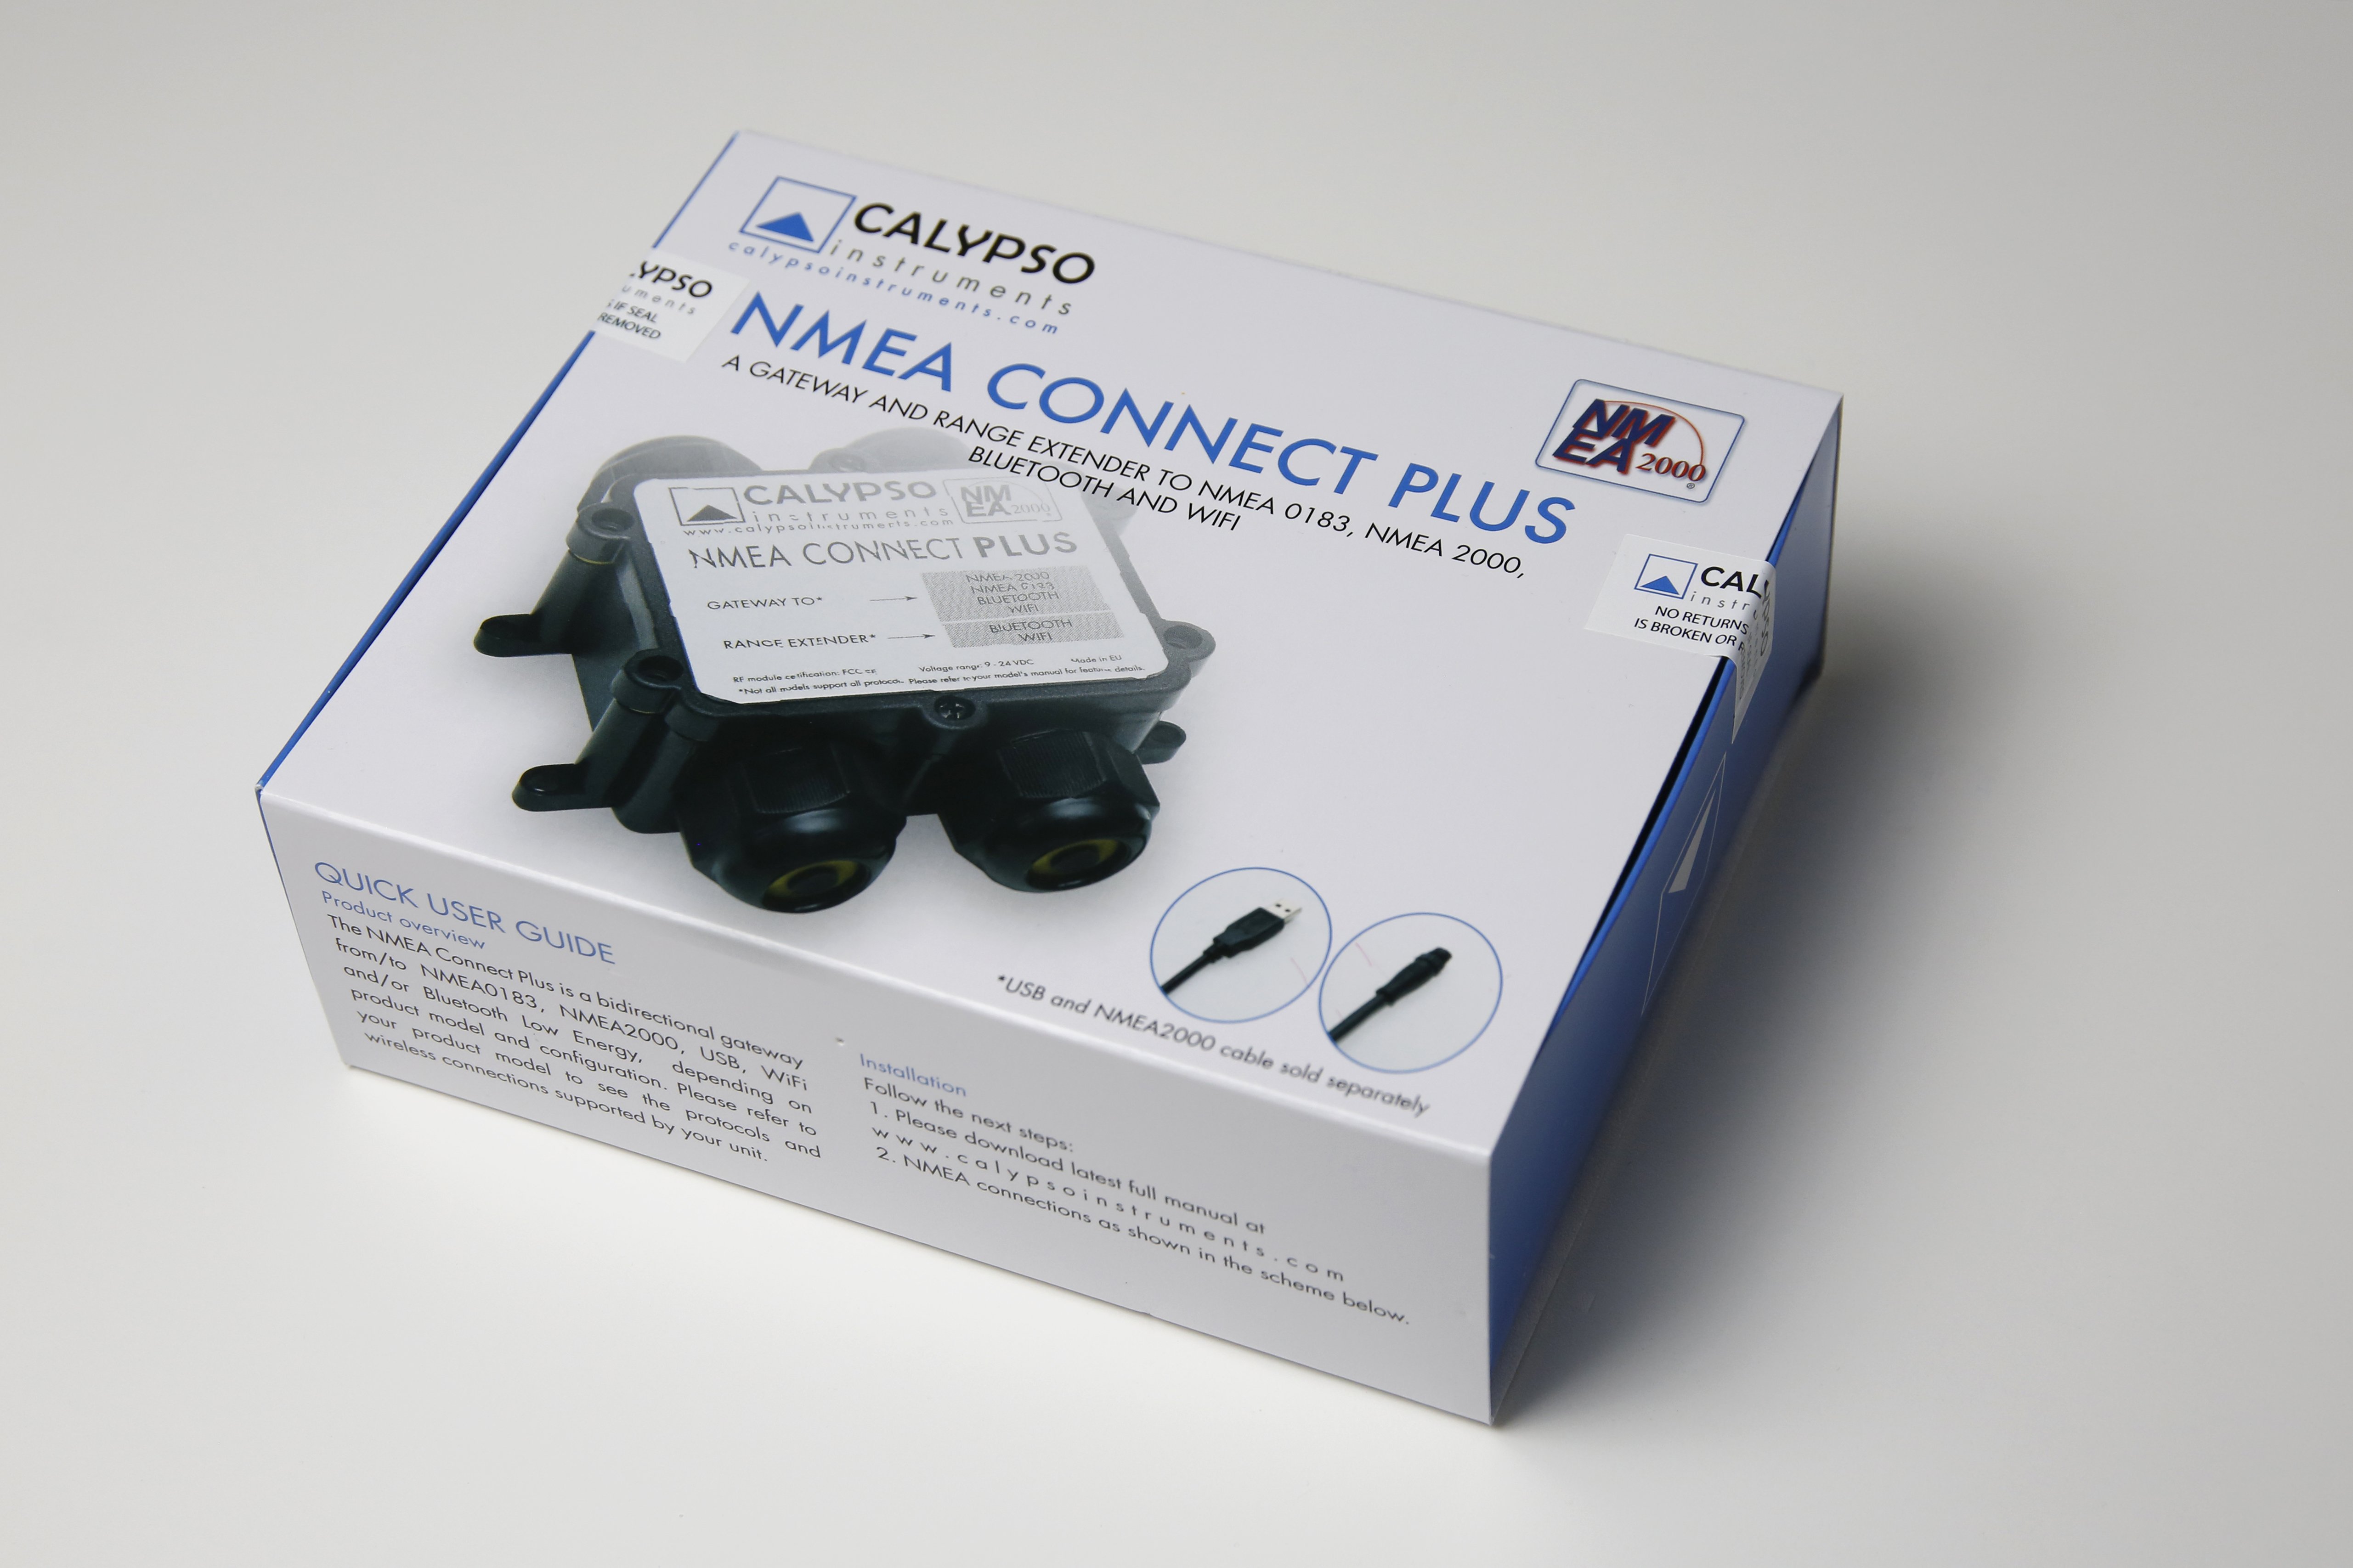 Calypso NMEA2000 CONNECT PLUS Gateway